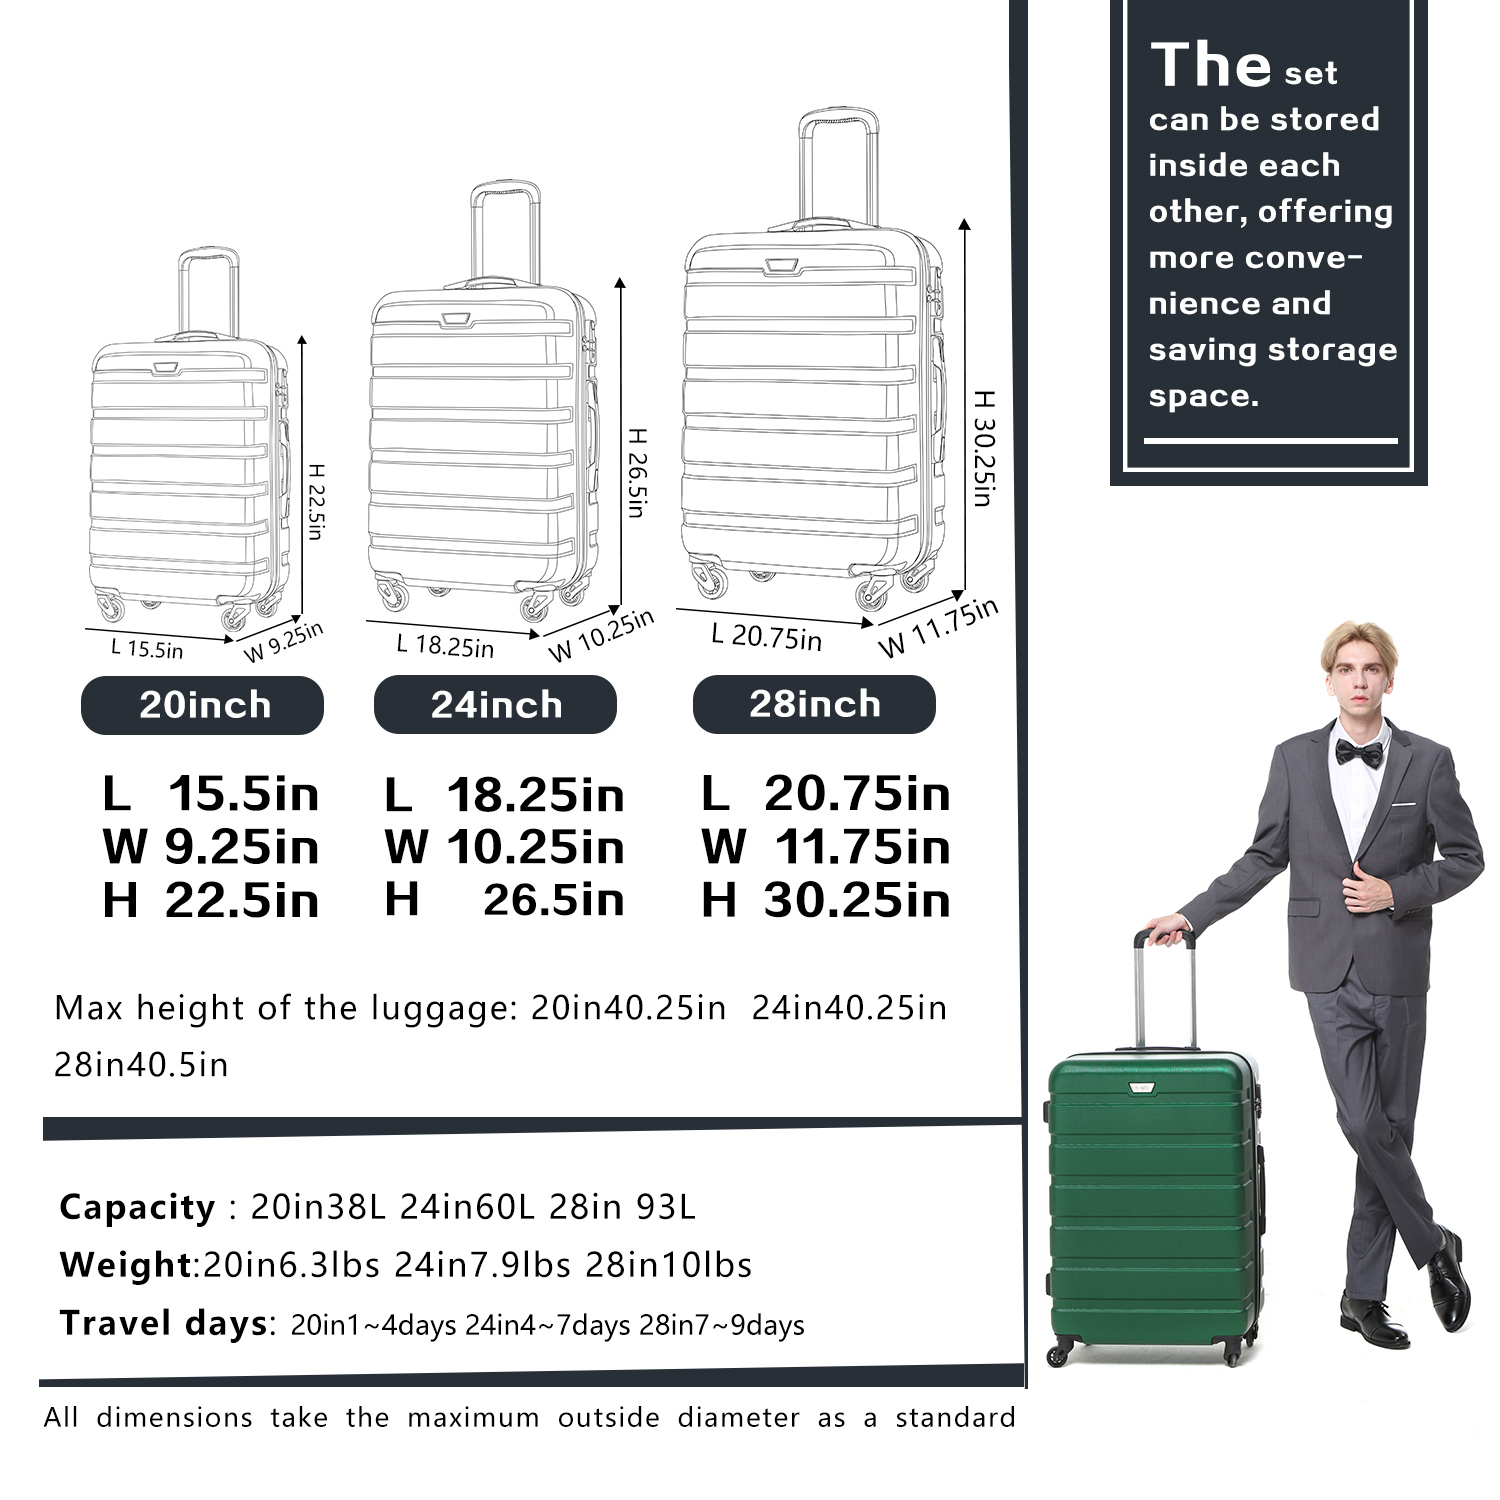 COOLIFE Luggage 3 Piece Set Suitcase Spinner Hardshell Lightweight TSA Lock  YD13